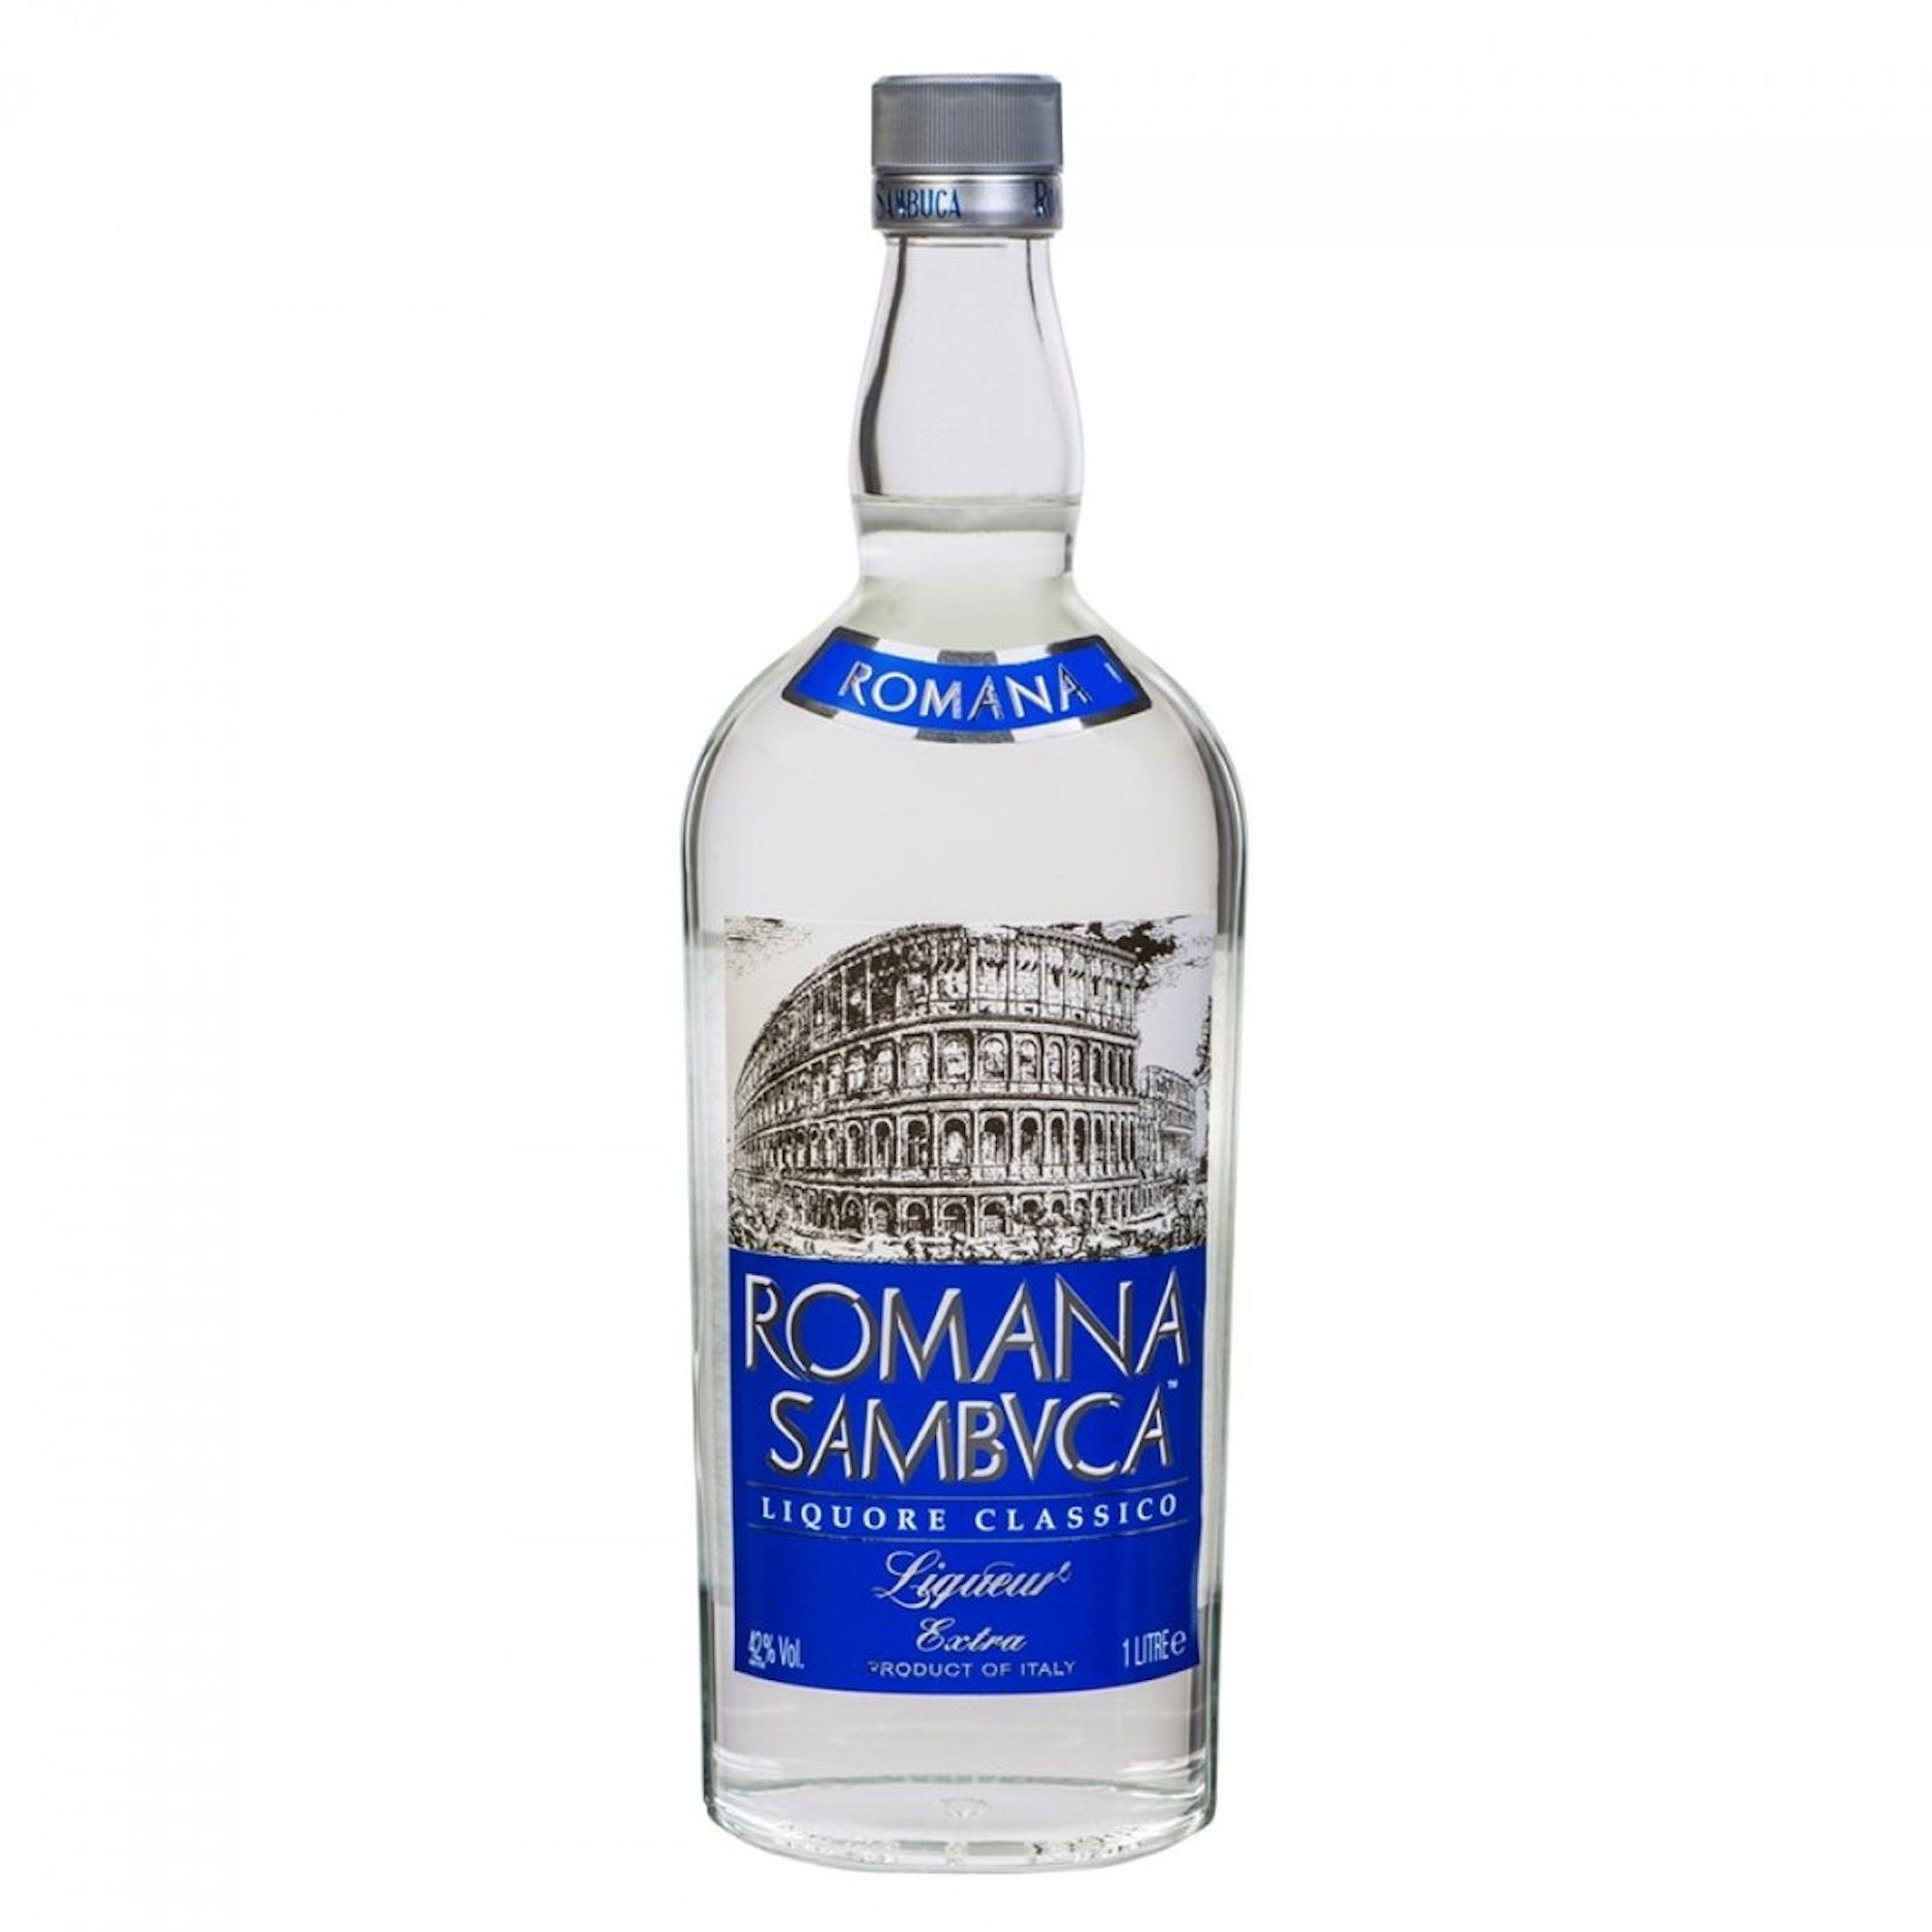 Romana Sambvca Liquore Classico